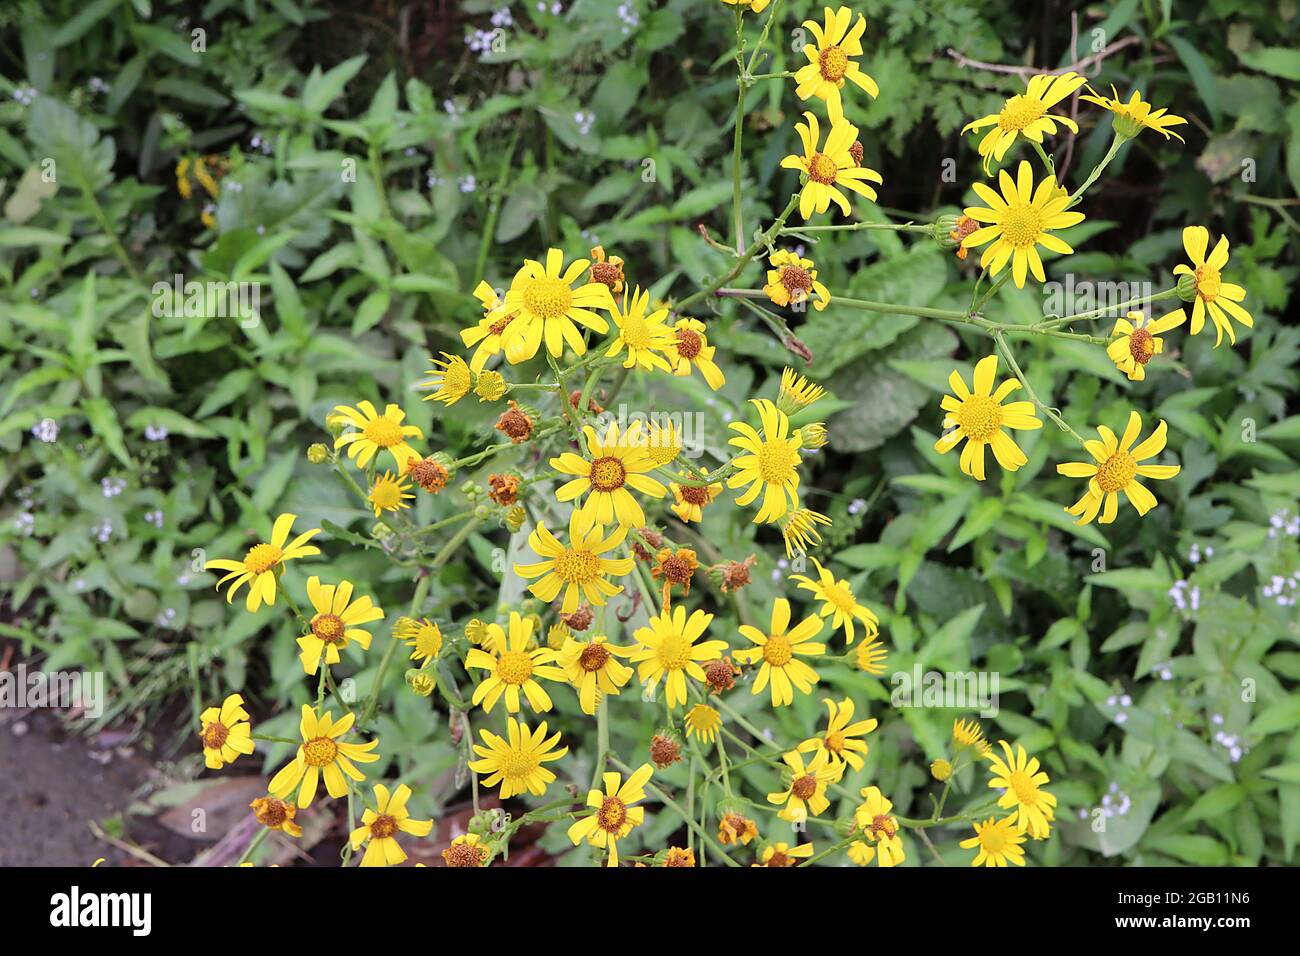 Senecio aurea / Packera aureus golden ragwort – yellow daisy-likes flowers on sprawling stems,  June, England, UK Stock Photo